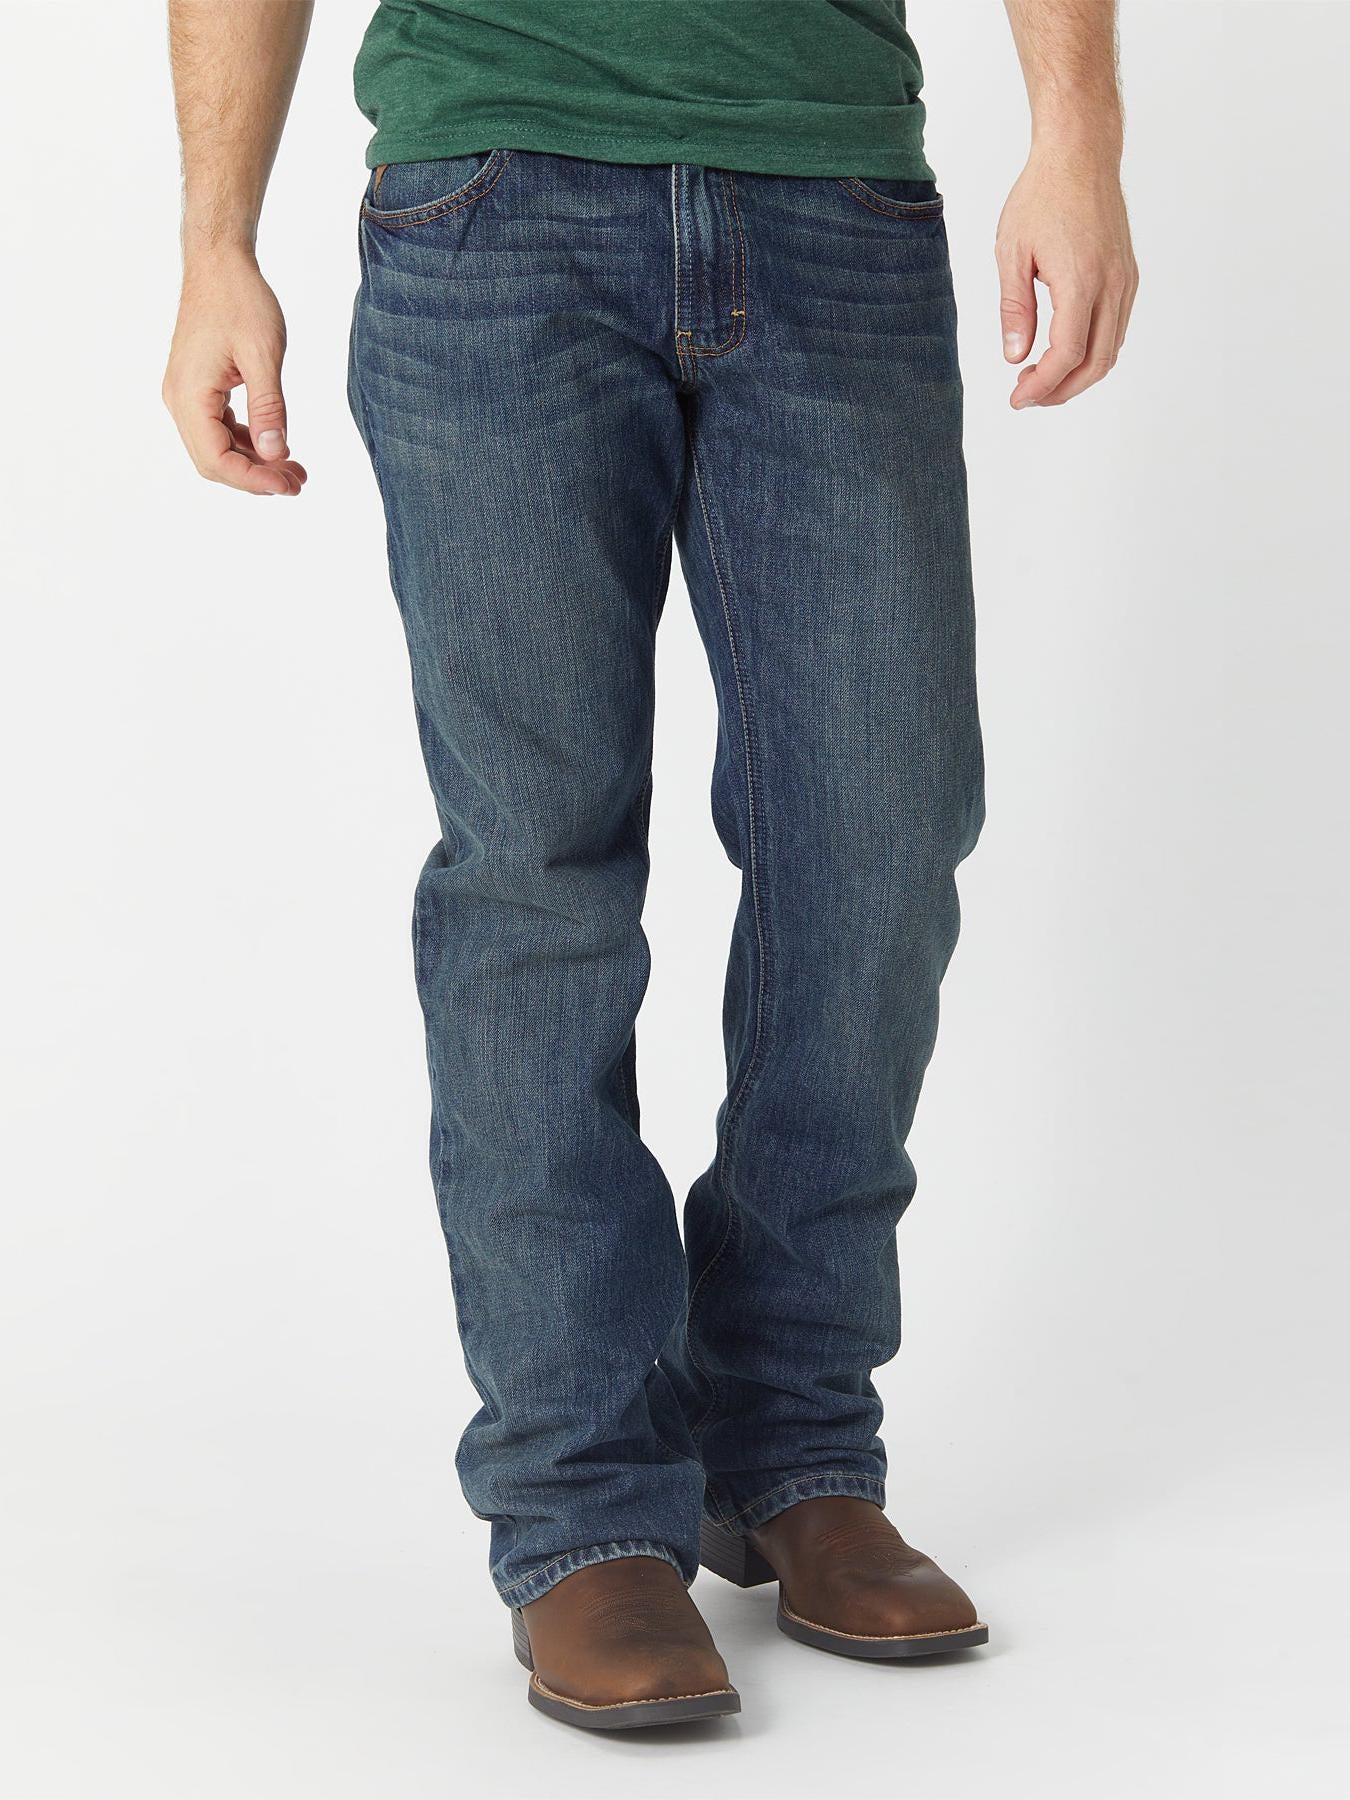 dark boot cut mens jeans